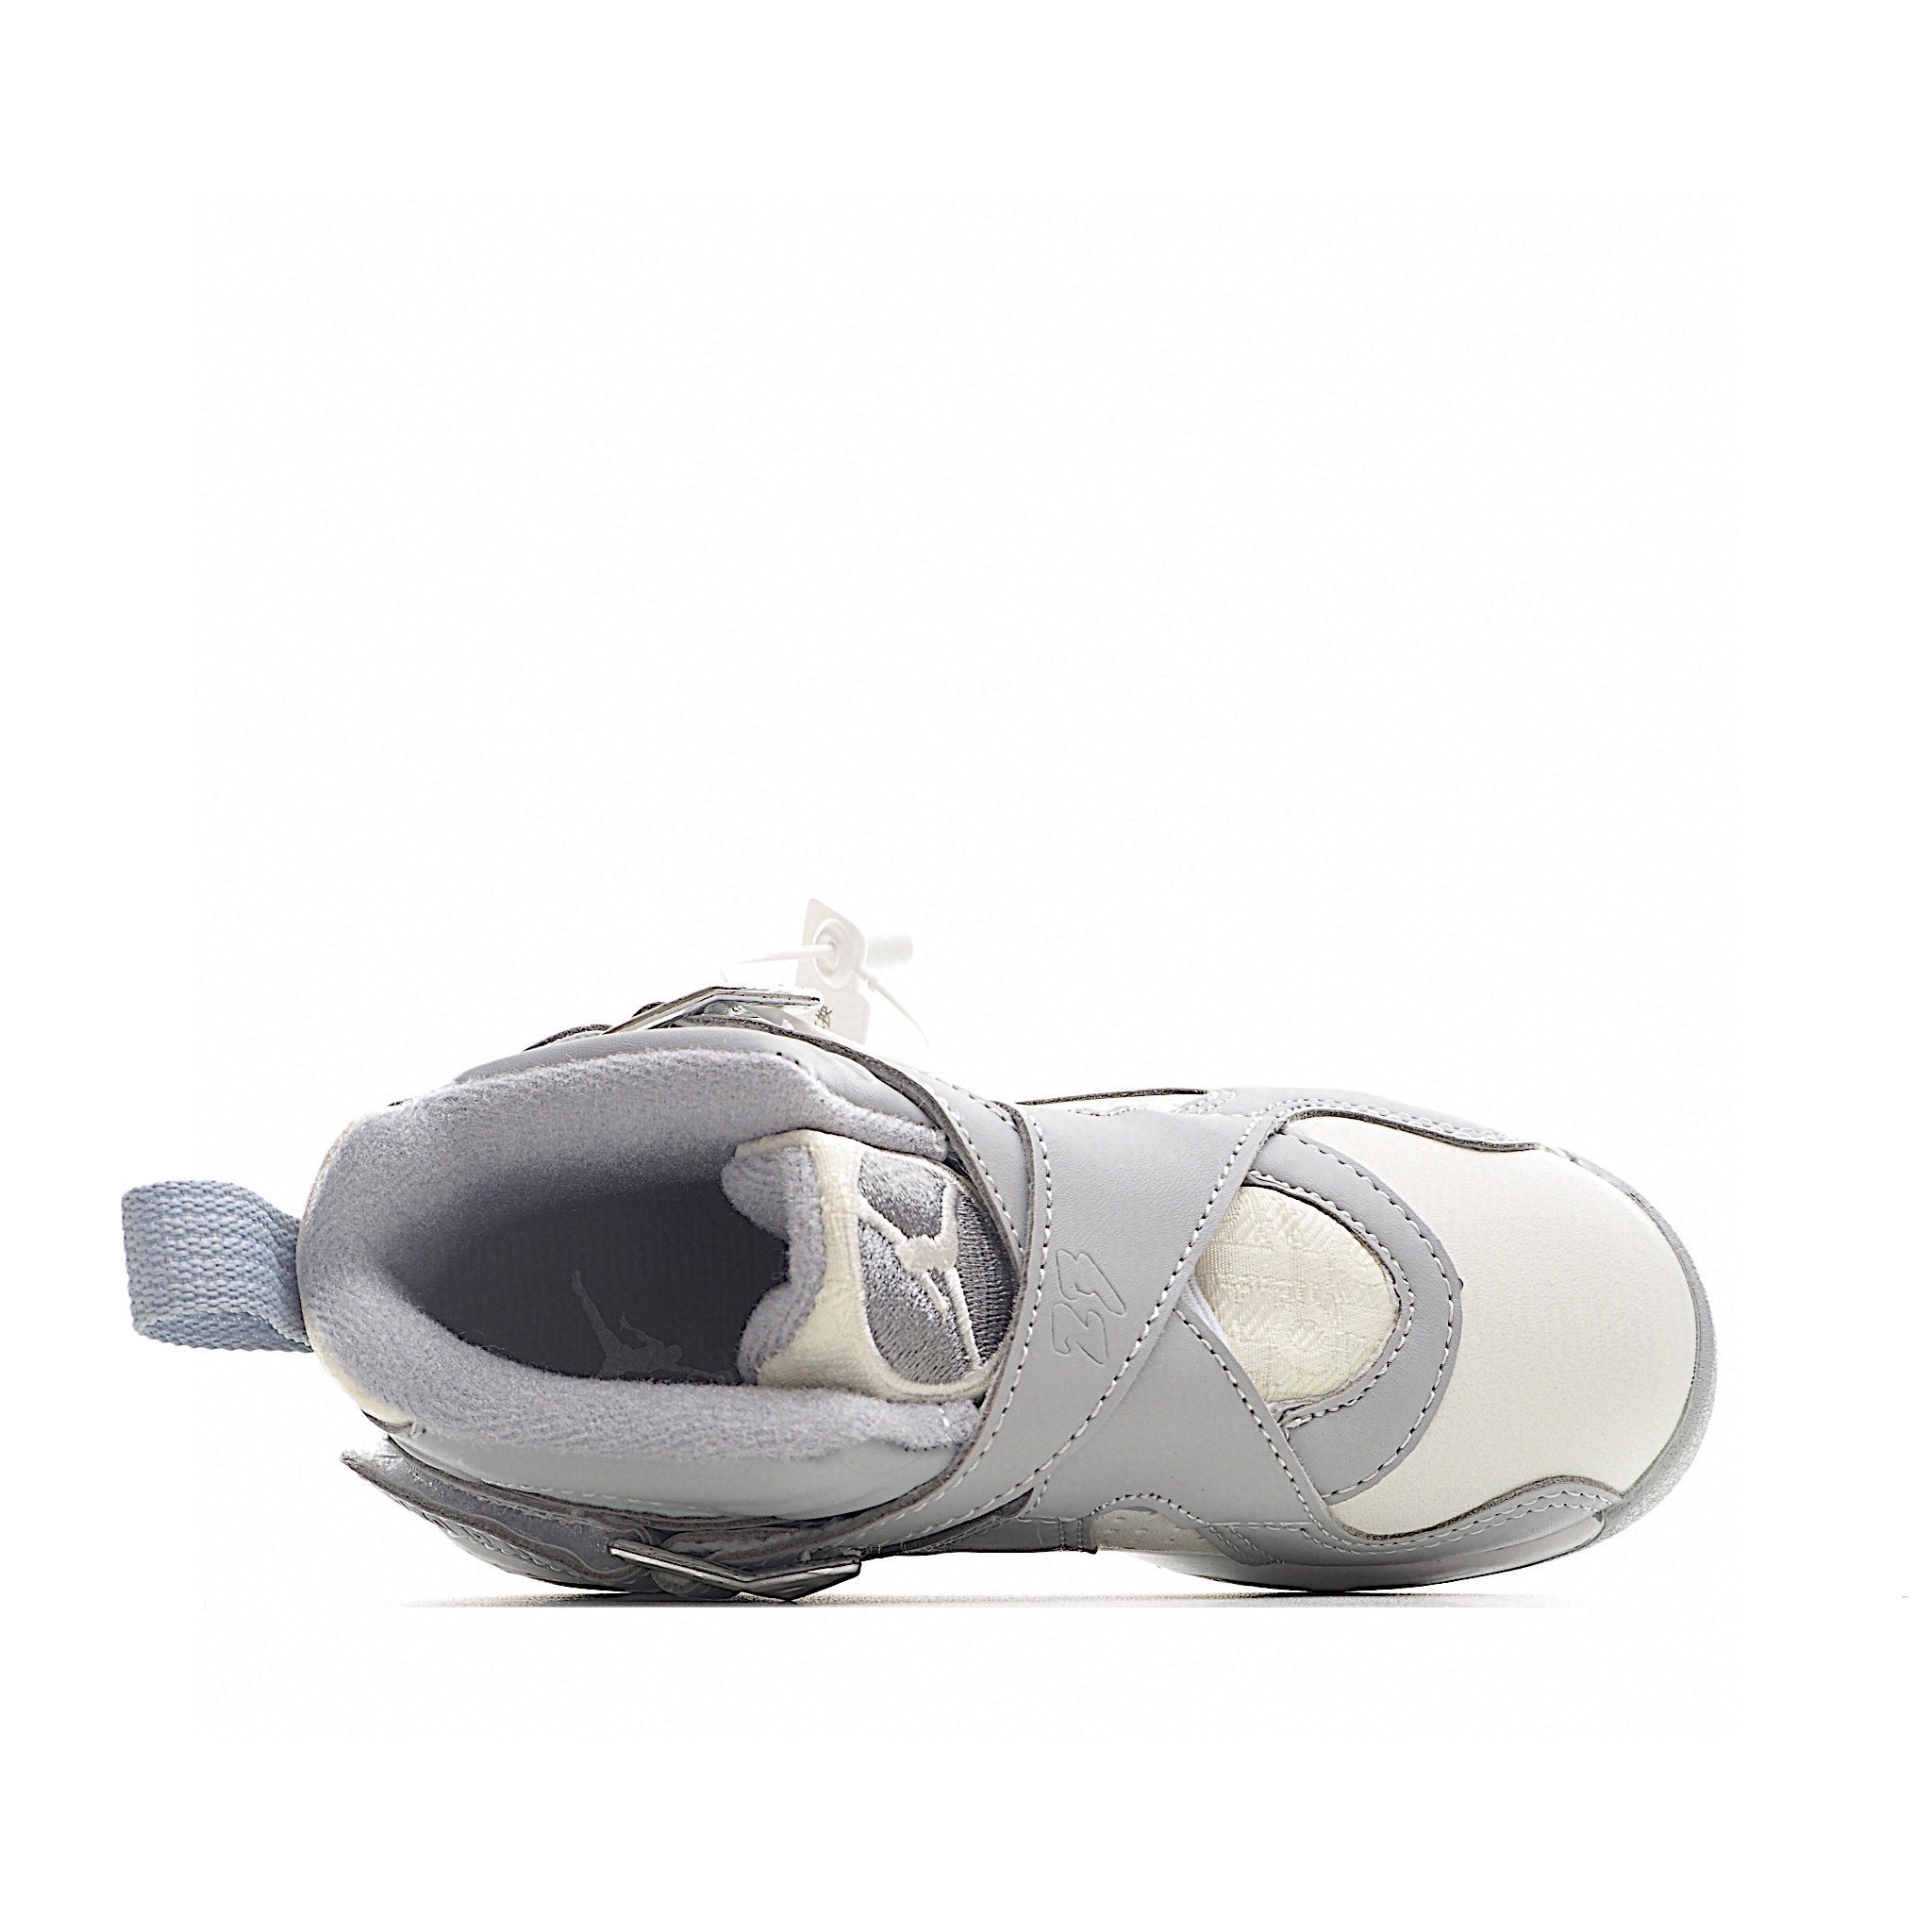 Nike air jordan 8 rétro chaussures grises